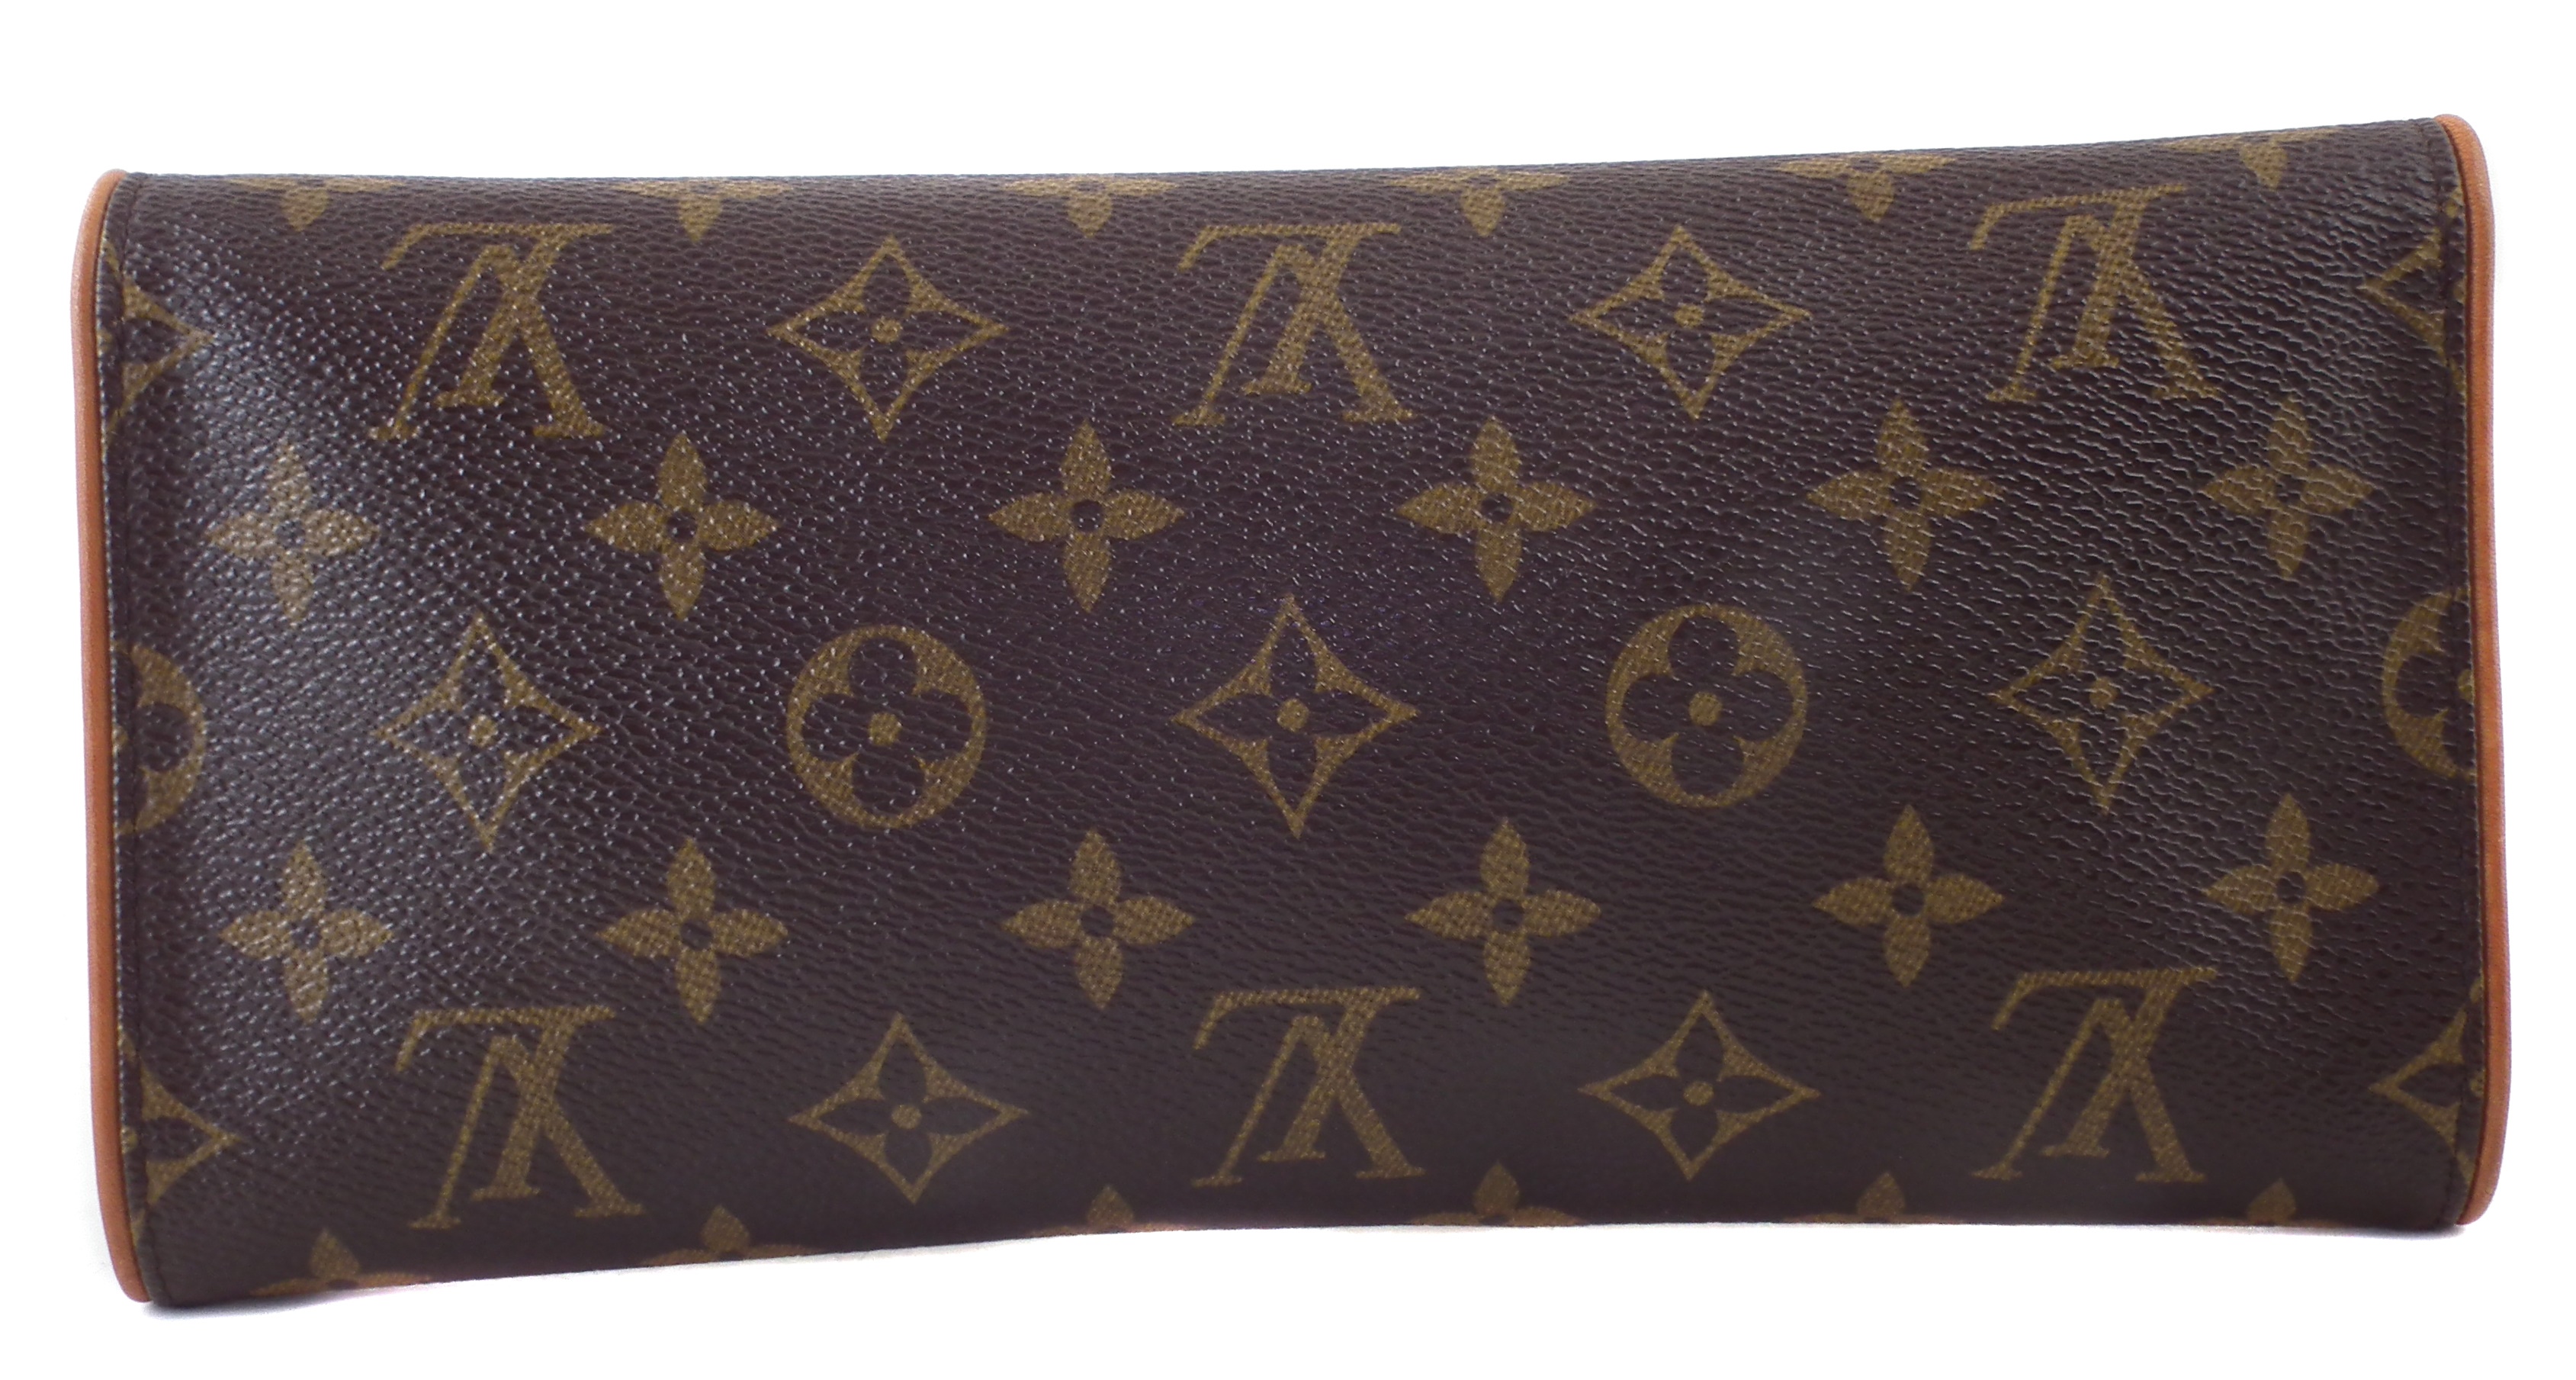 A Louis Vuitton Monogram Twin GM handbag,